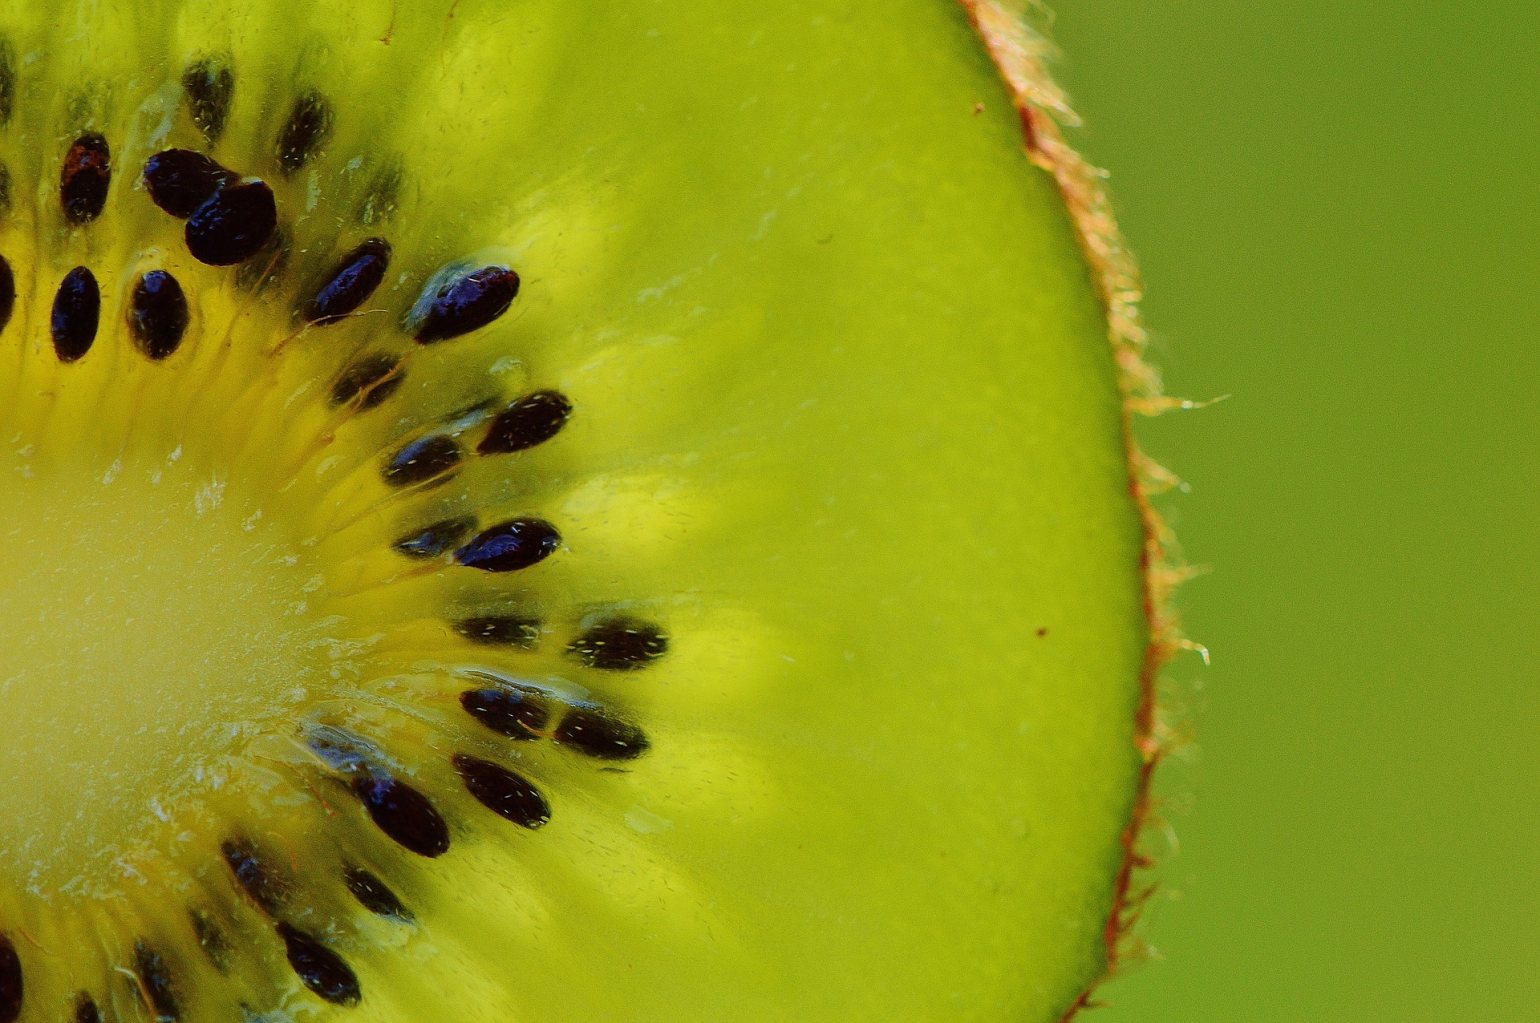 Close up of a green kiwi